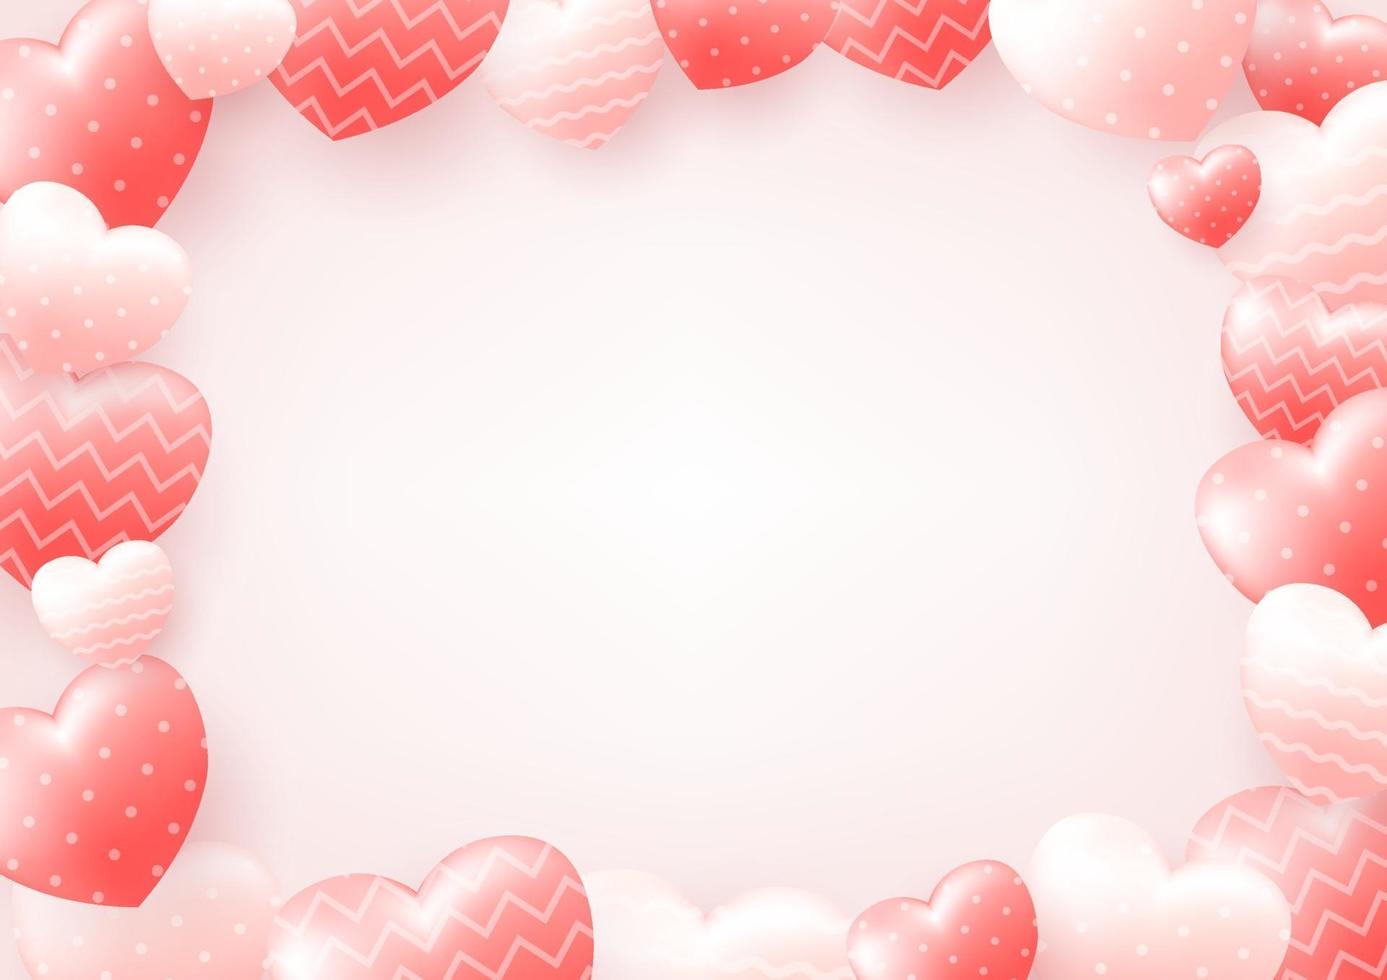 Fondo de feliz día de San Valentín con corazón y composición real para pancarta de moda, póster o tarjeta de felicitación. vector